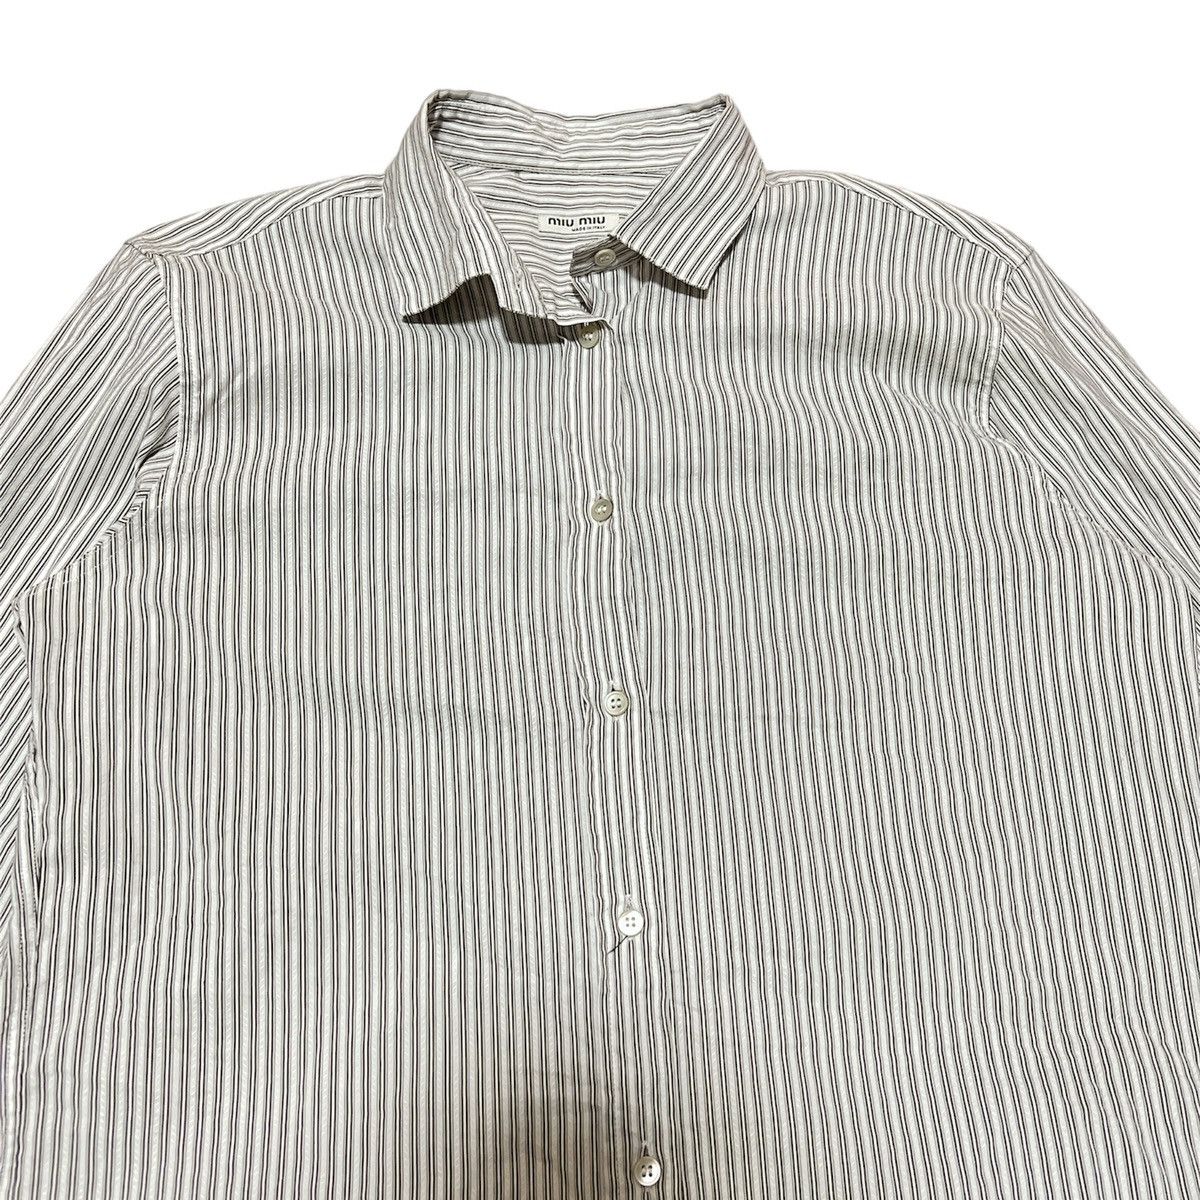 Miu Miu striped button ups shirt 2006 - 2